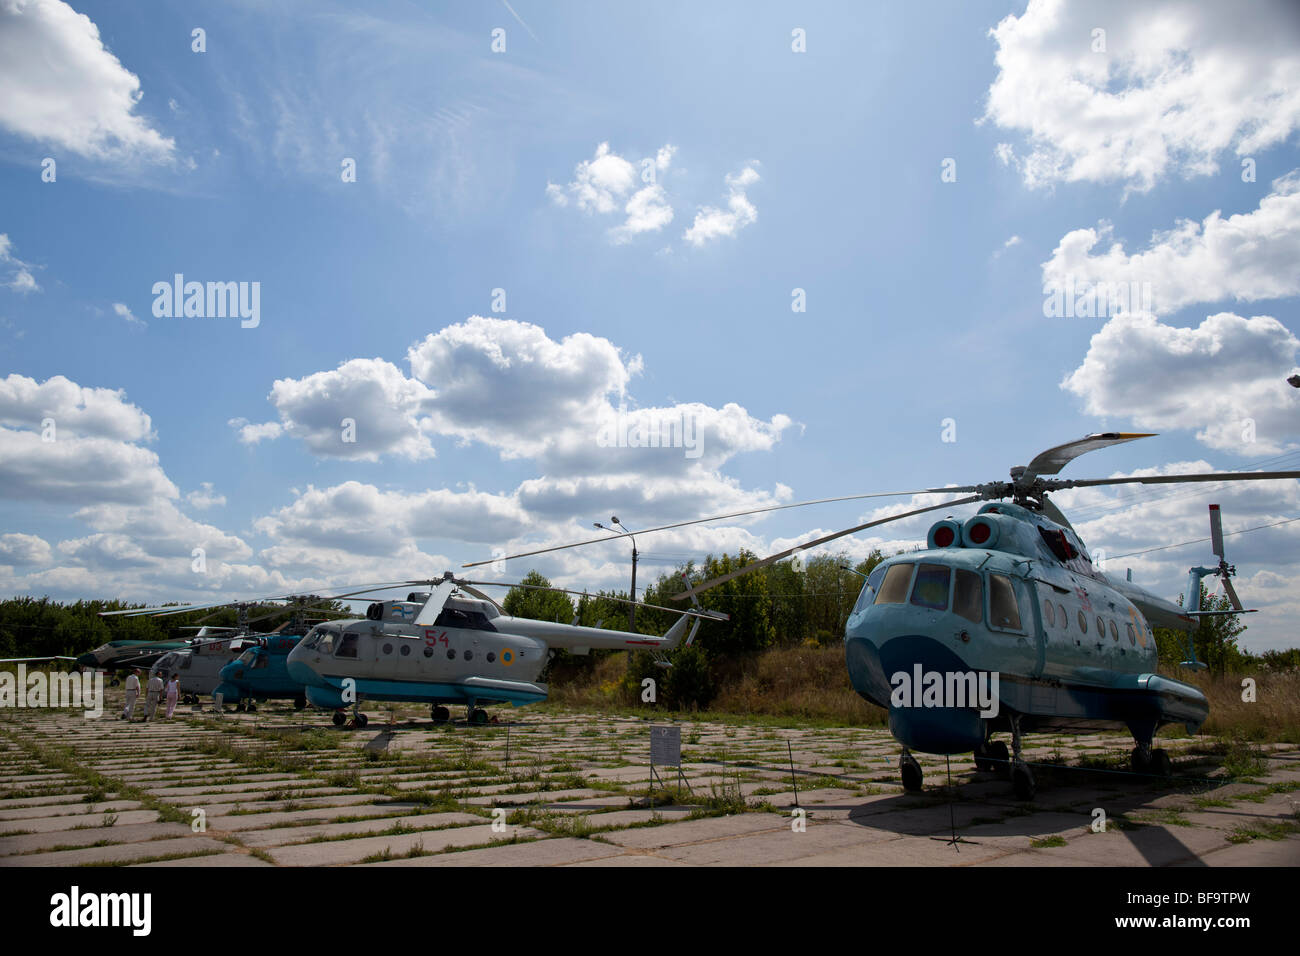 Elicotteri storico stand in ucraino Aviation Museum in Kiev-Zhulyany. Foto Stock